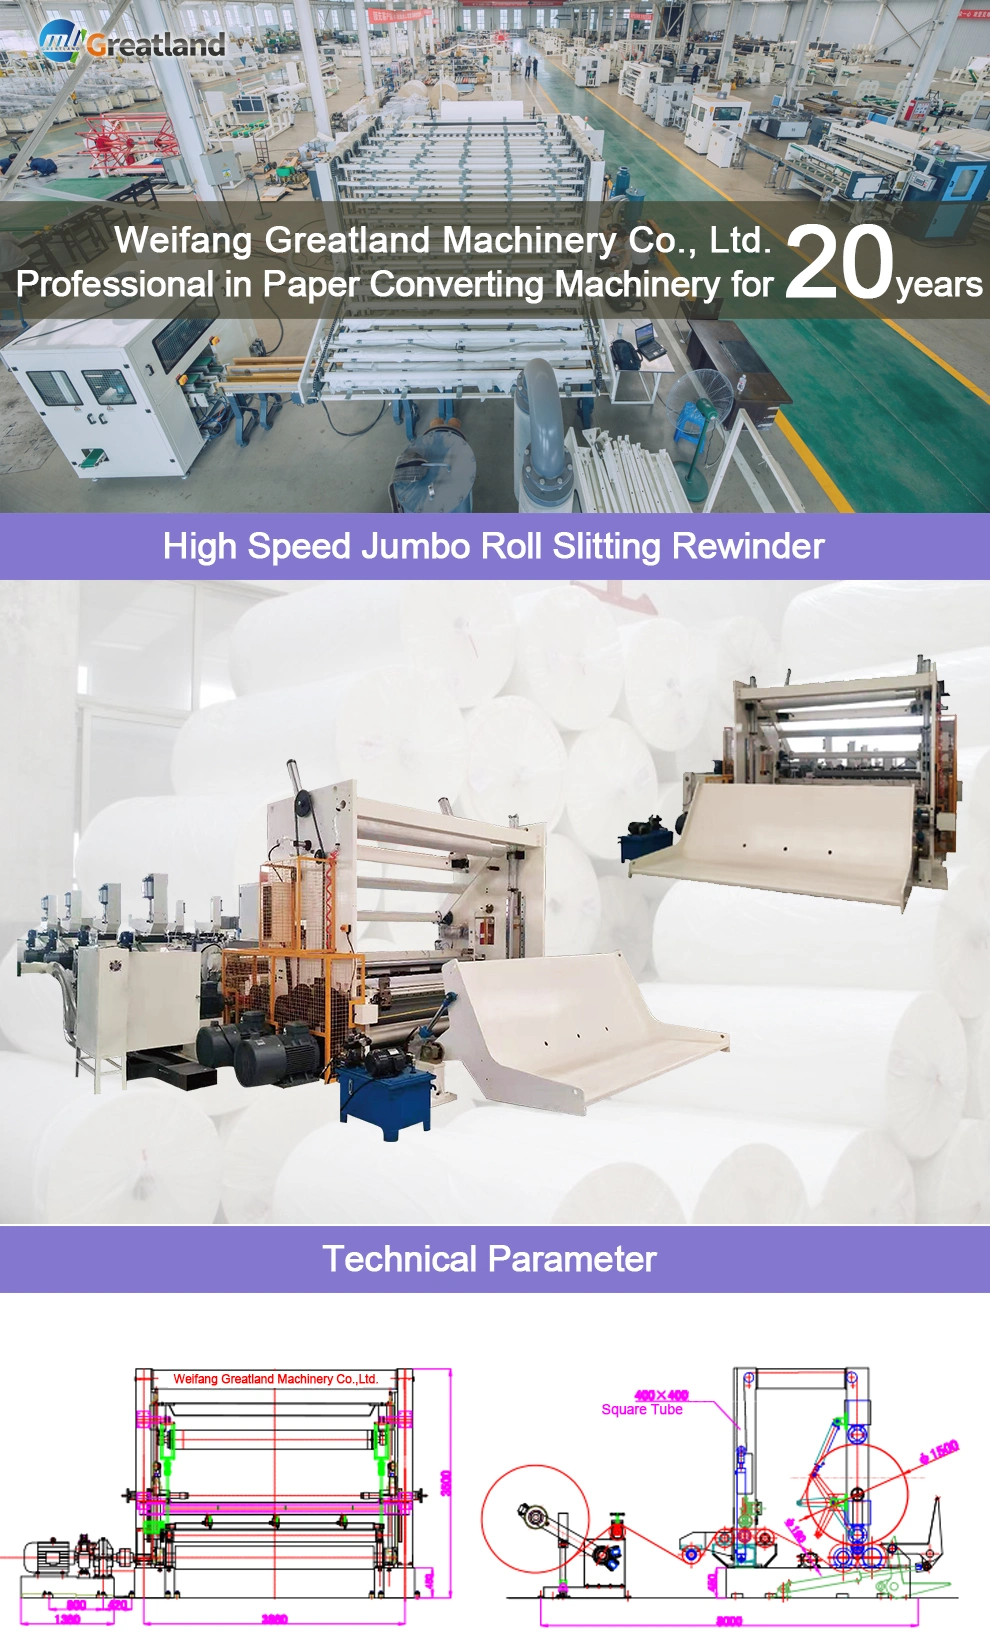 Greatland Easy Jumbo Plastic Roll to Roll Rewinder Whit Shaft Less Core System of Jumbo Tissue Roll Slitting Machine